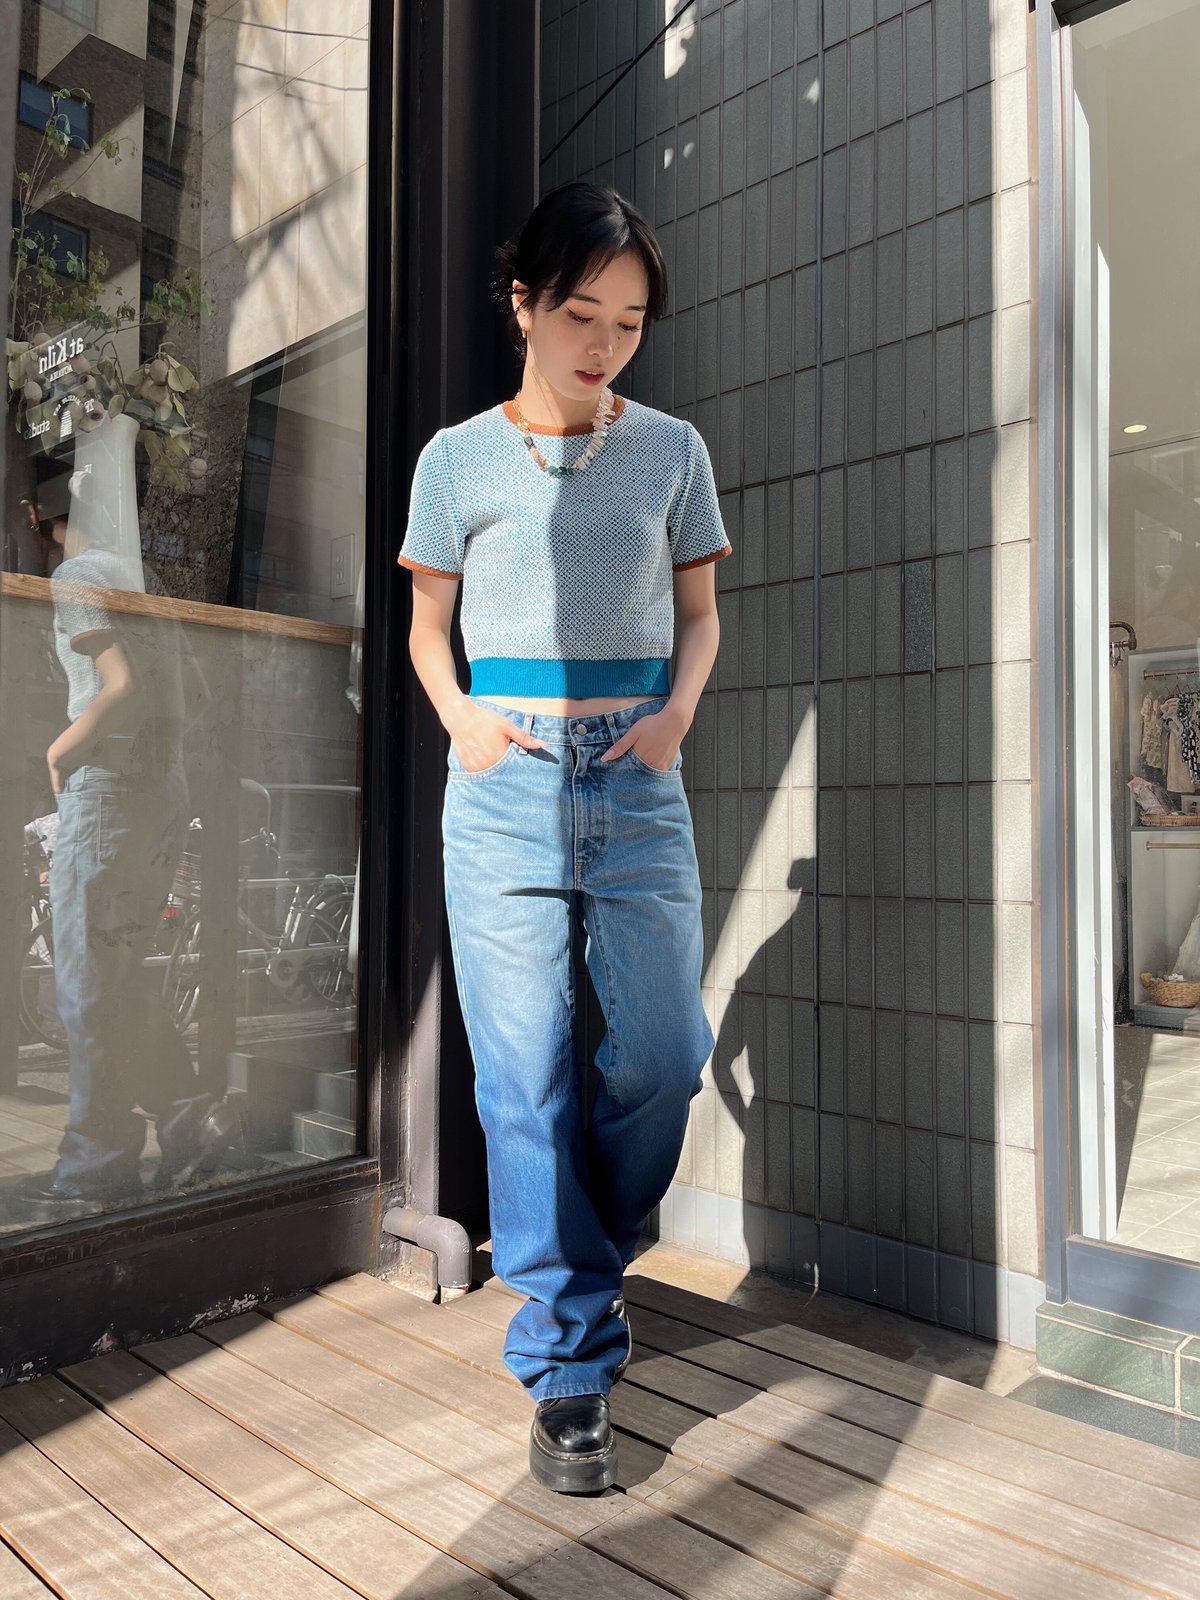 MURRAL / Jelly knit top | jurk tokyo